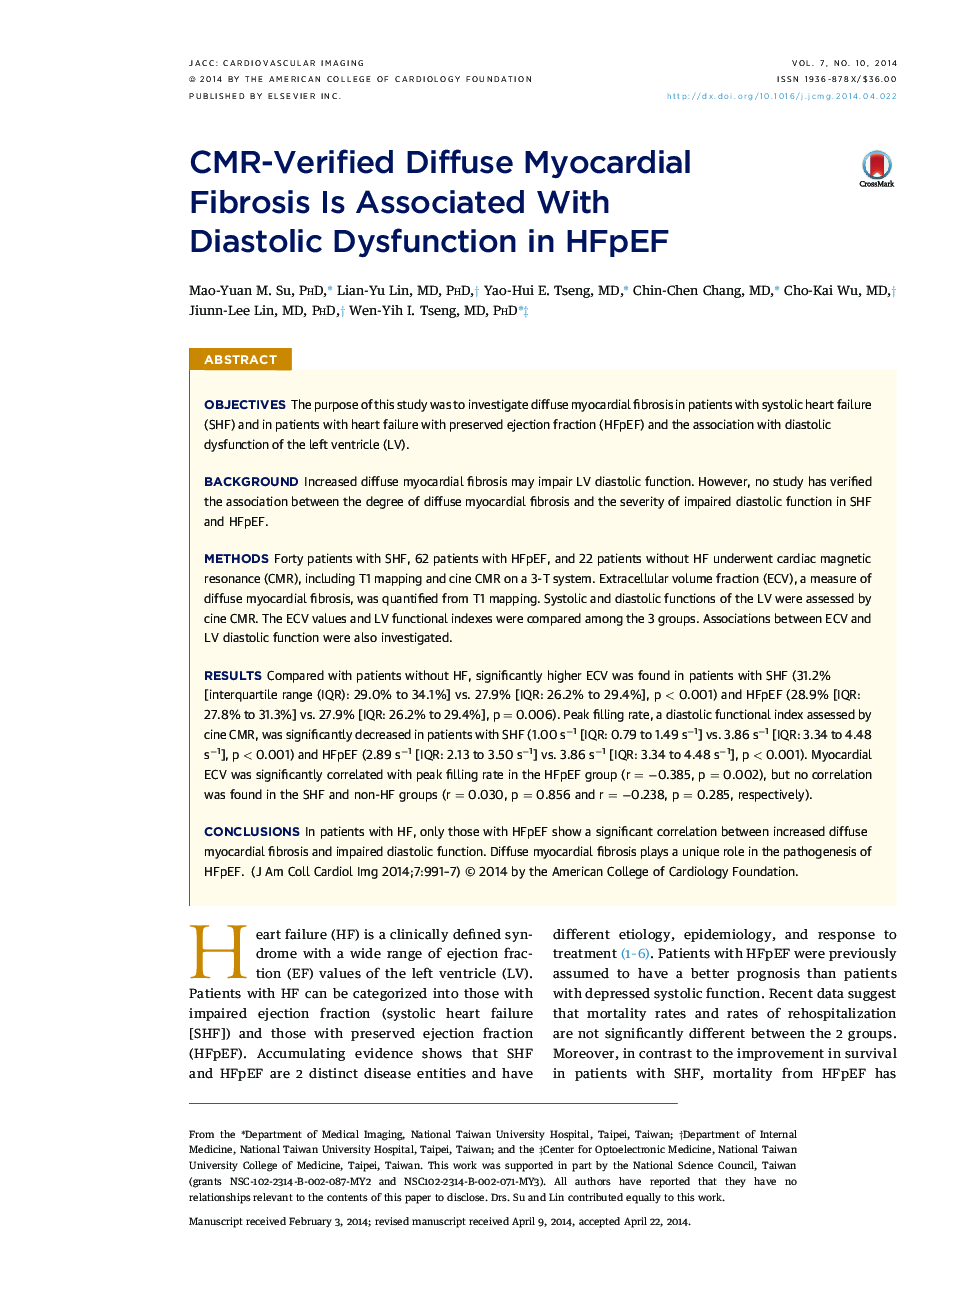 CMR-Verified Diffuse Myocardial FibrosisÂ IsÂ Associated With Diastolic DysfunctionÂ inÂ HFpEF